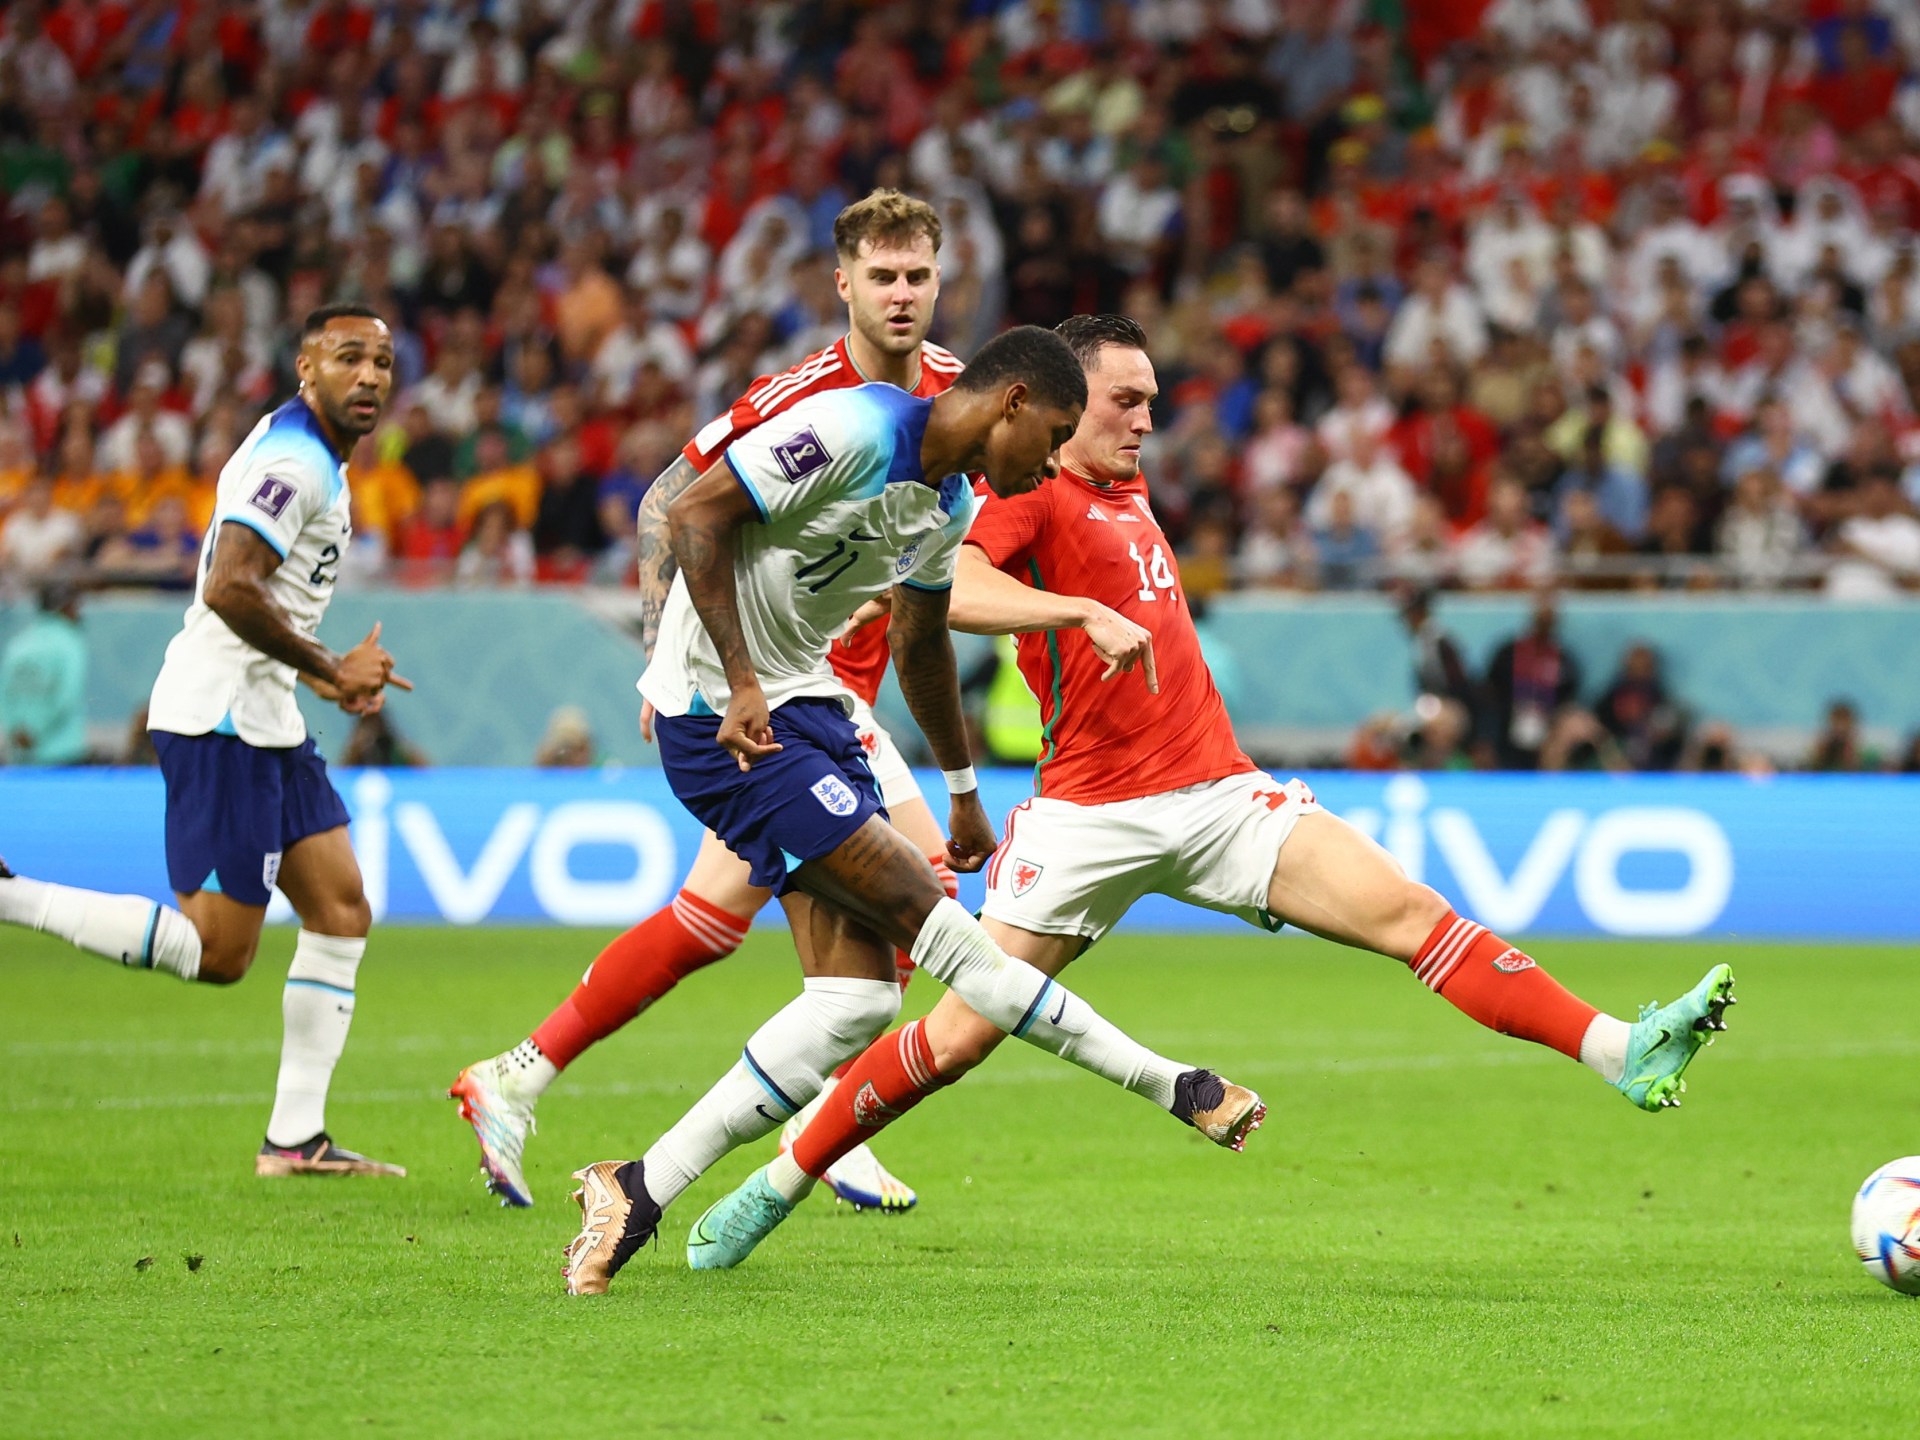 Photographs: Rashford brace downs Wales and sends England to final 16